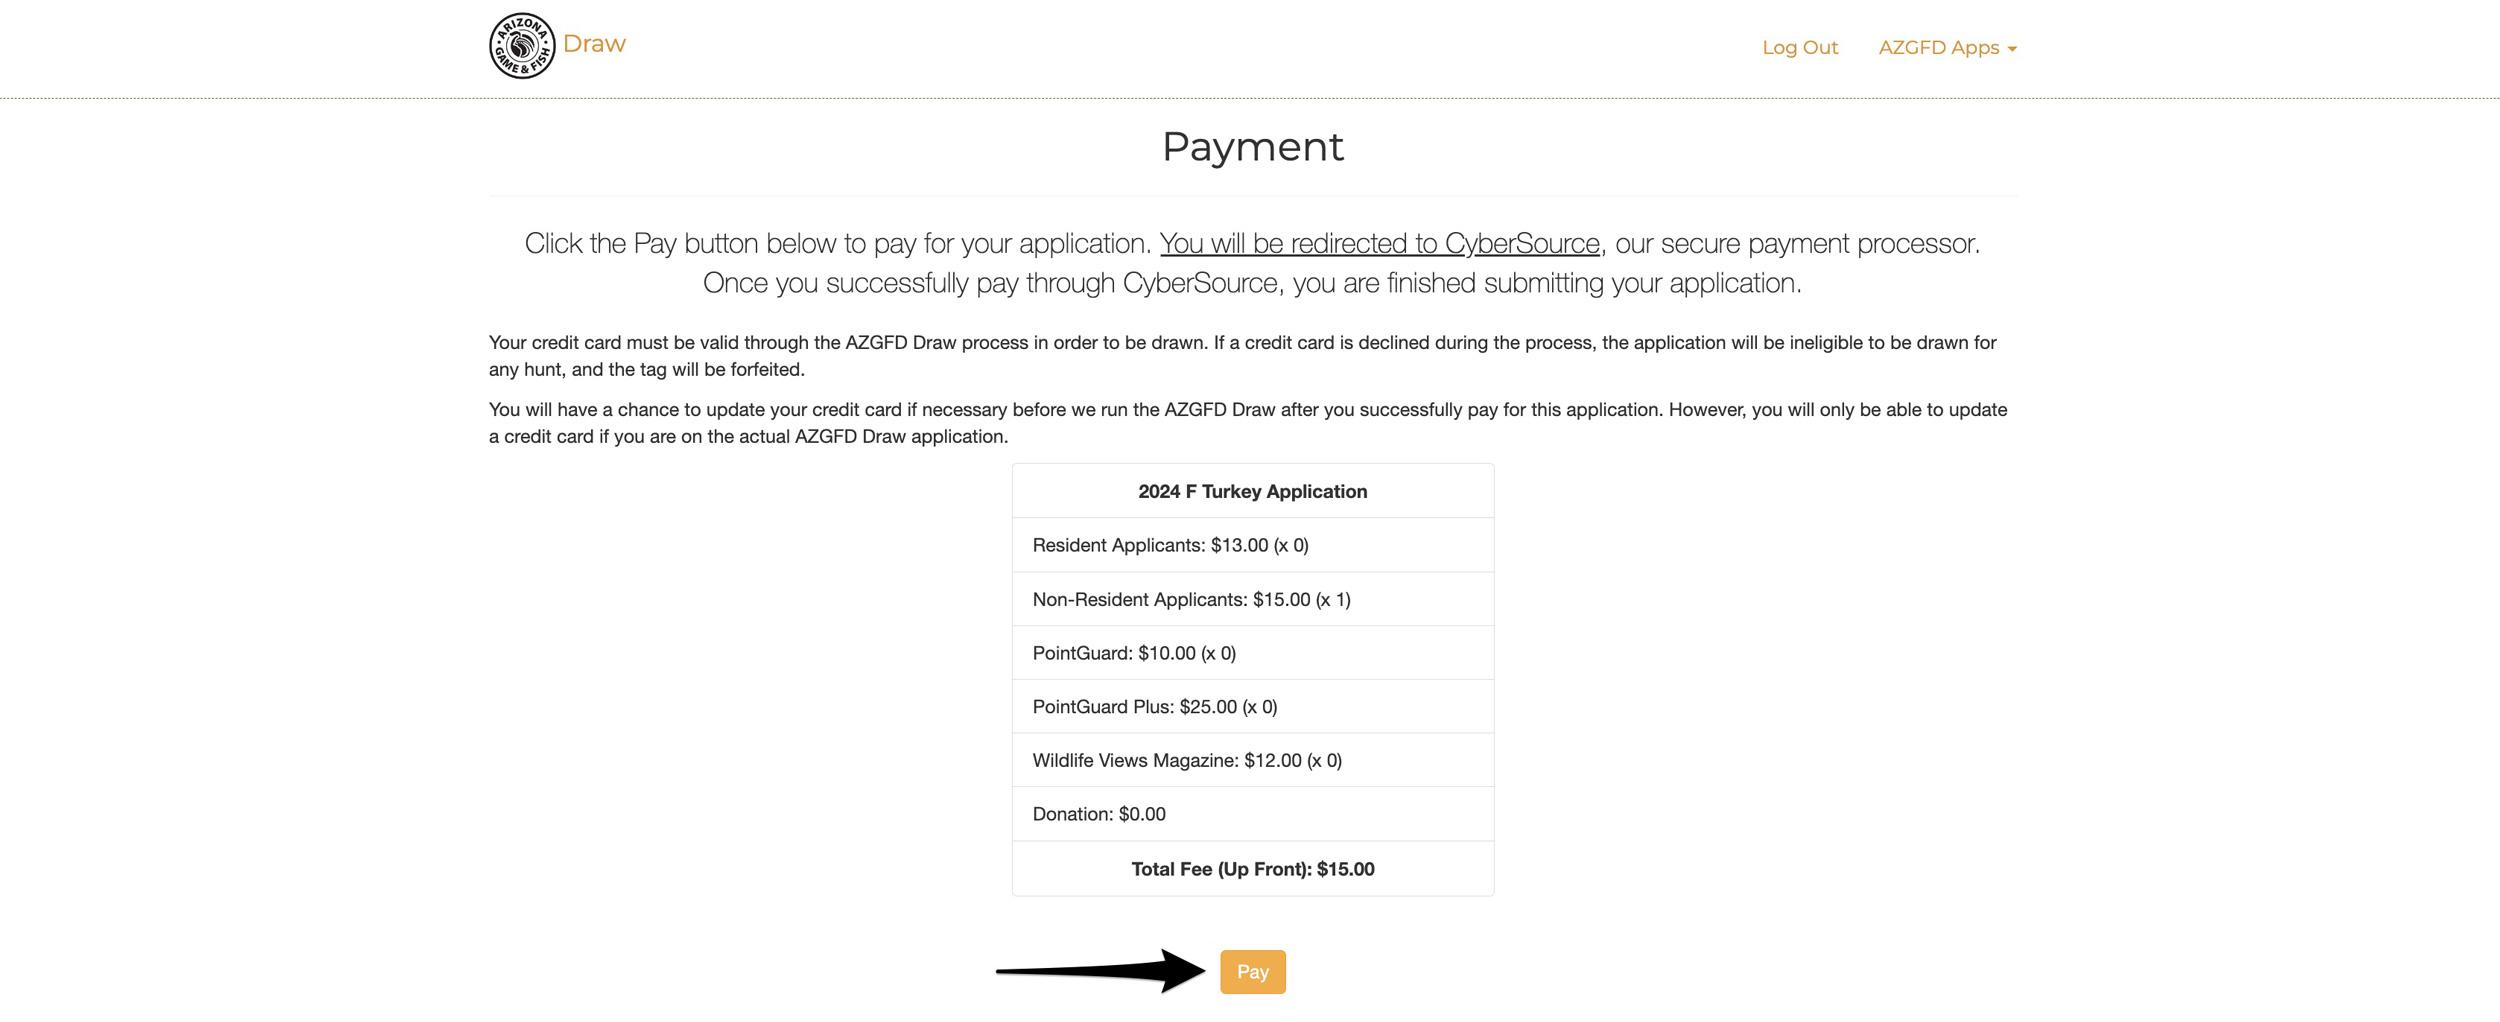 Arizona bonus point payment review page